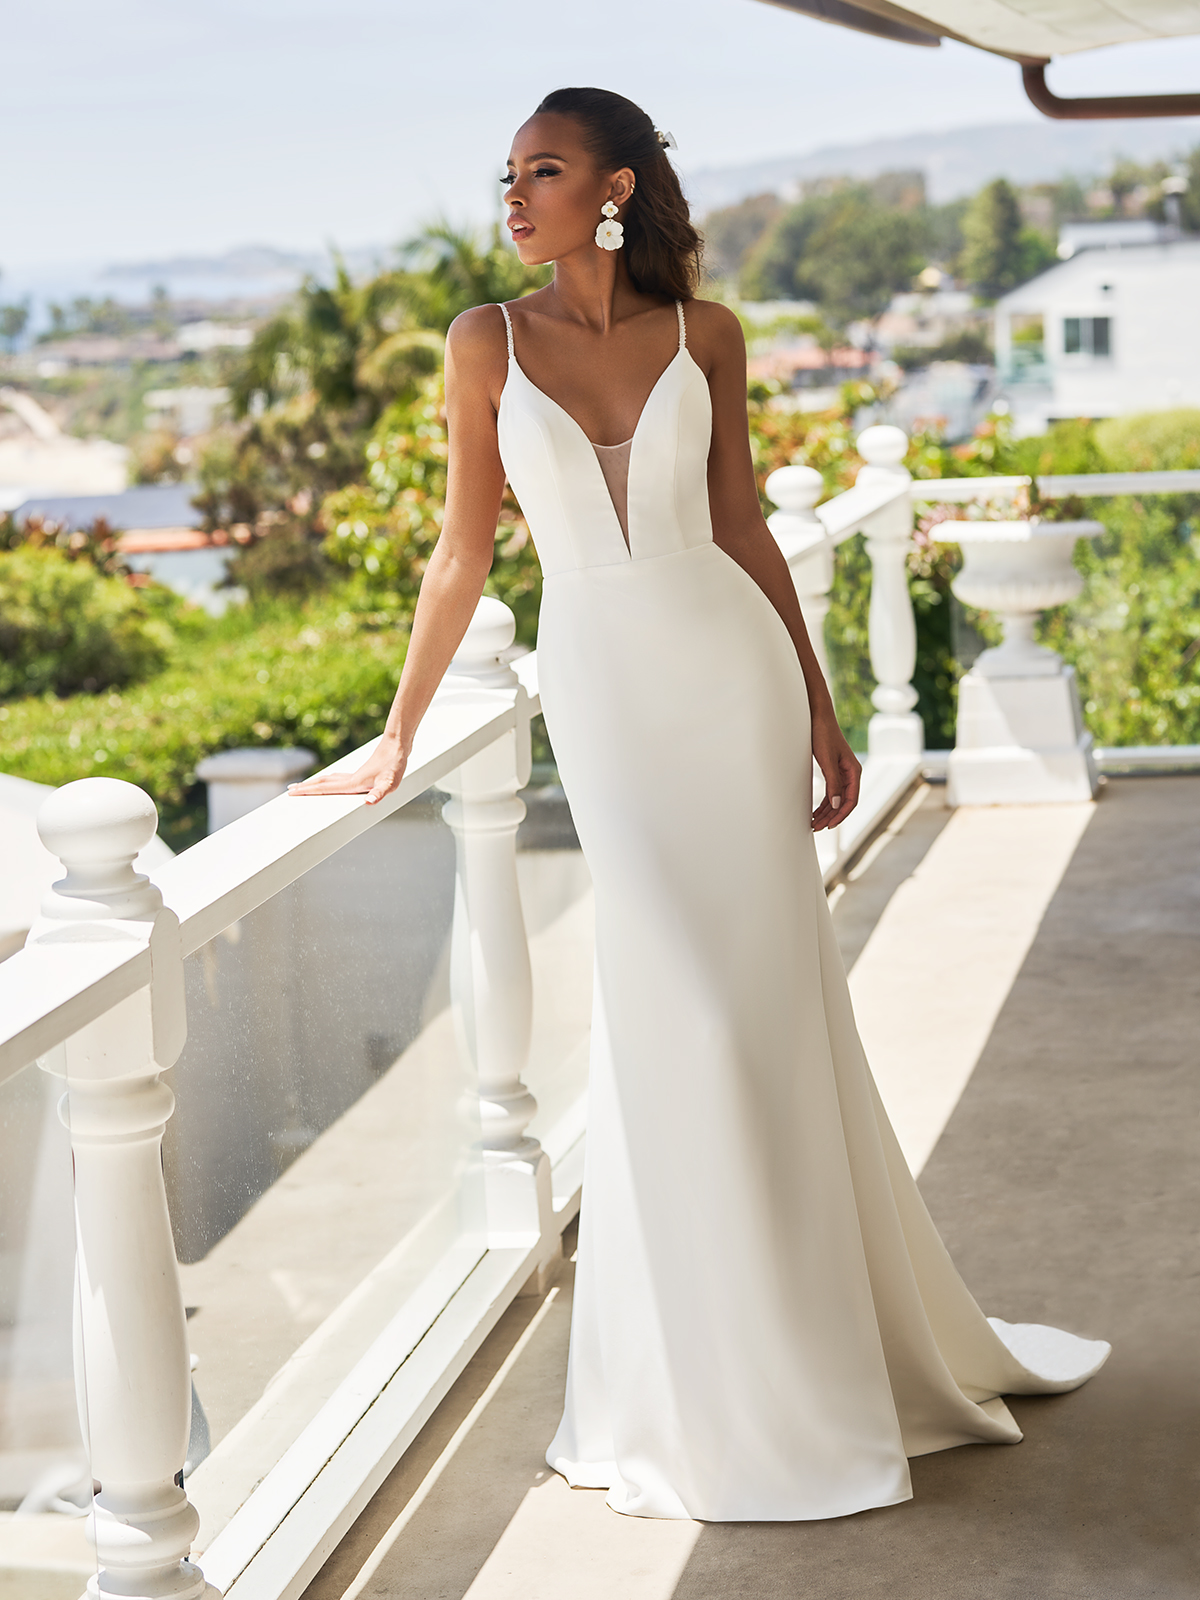 Simple And Elegant Wedding Dresses Wedding Inspiration Moonlight Blog 1204